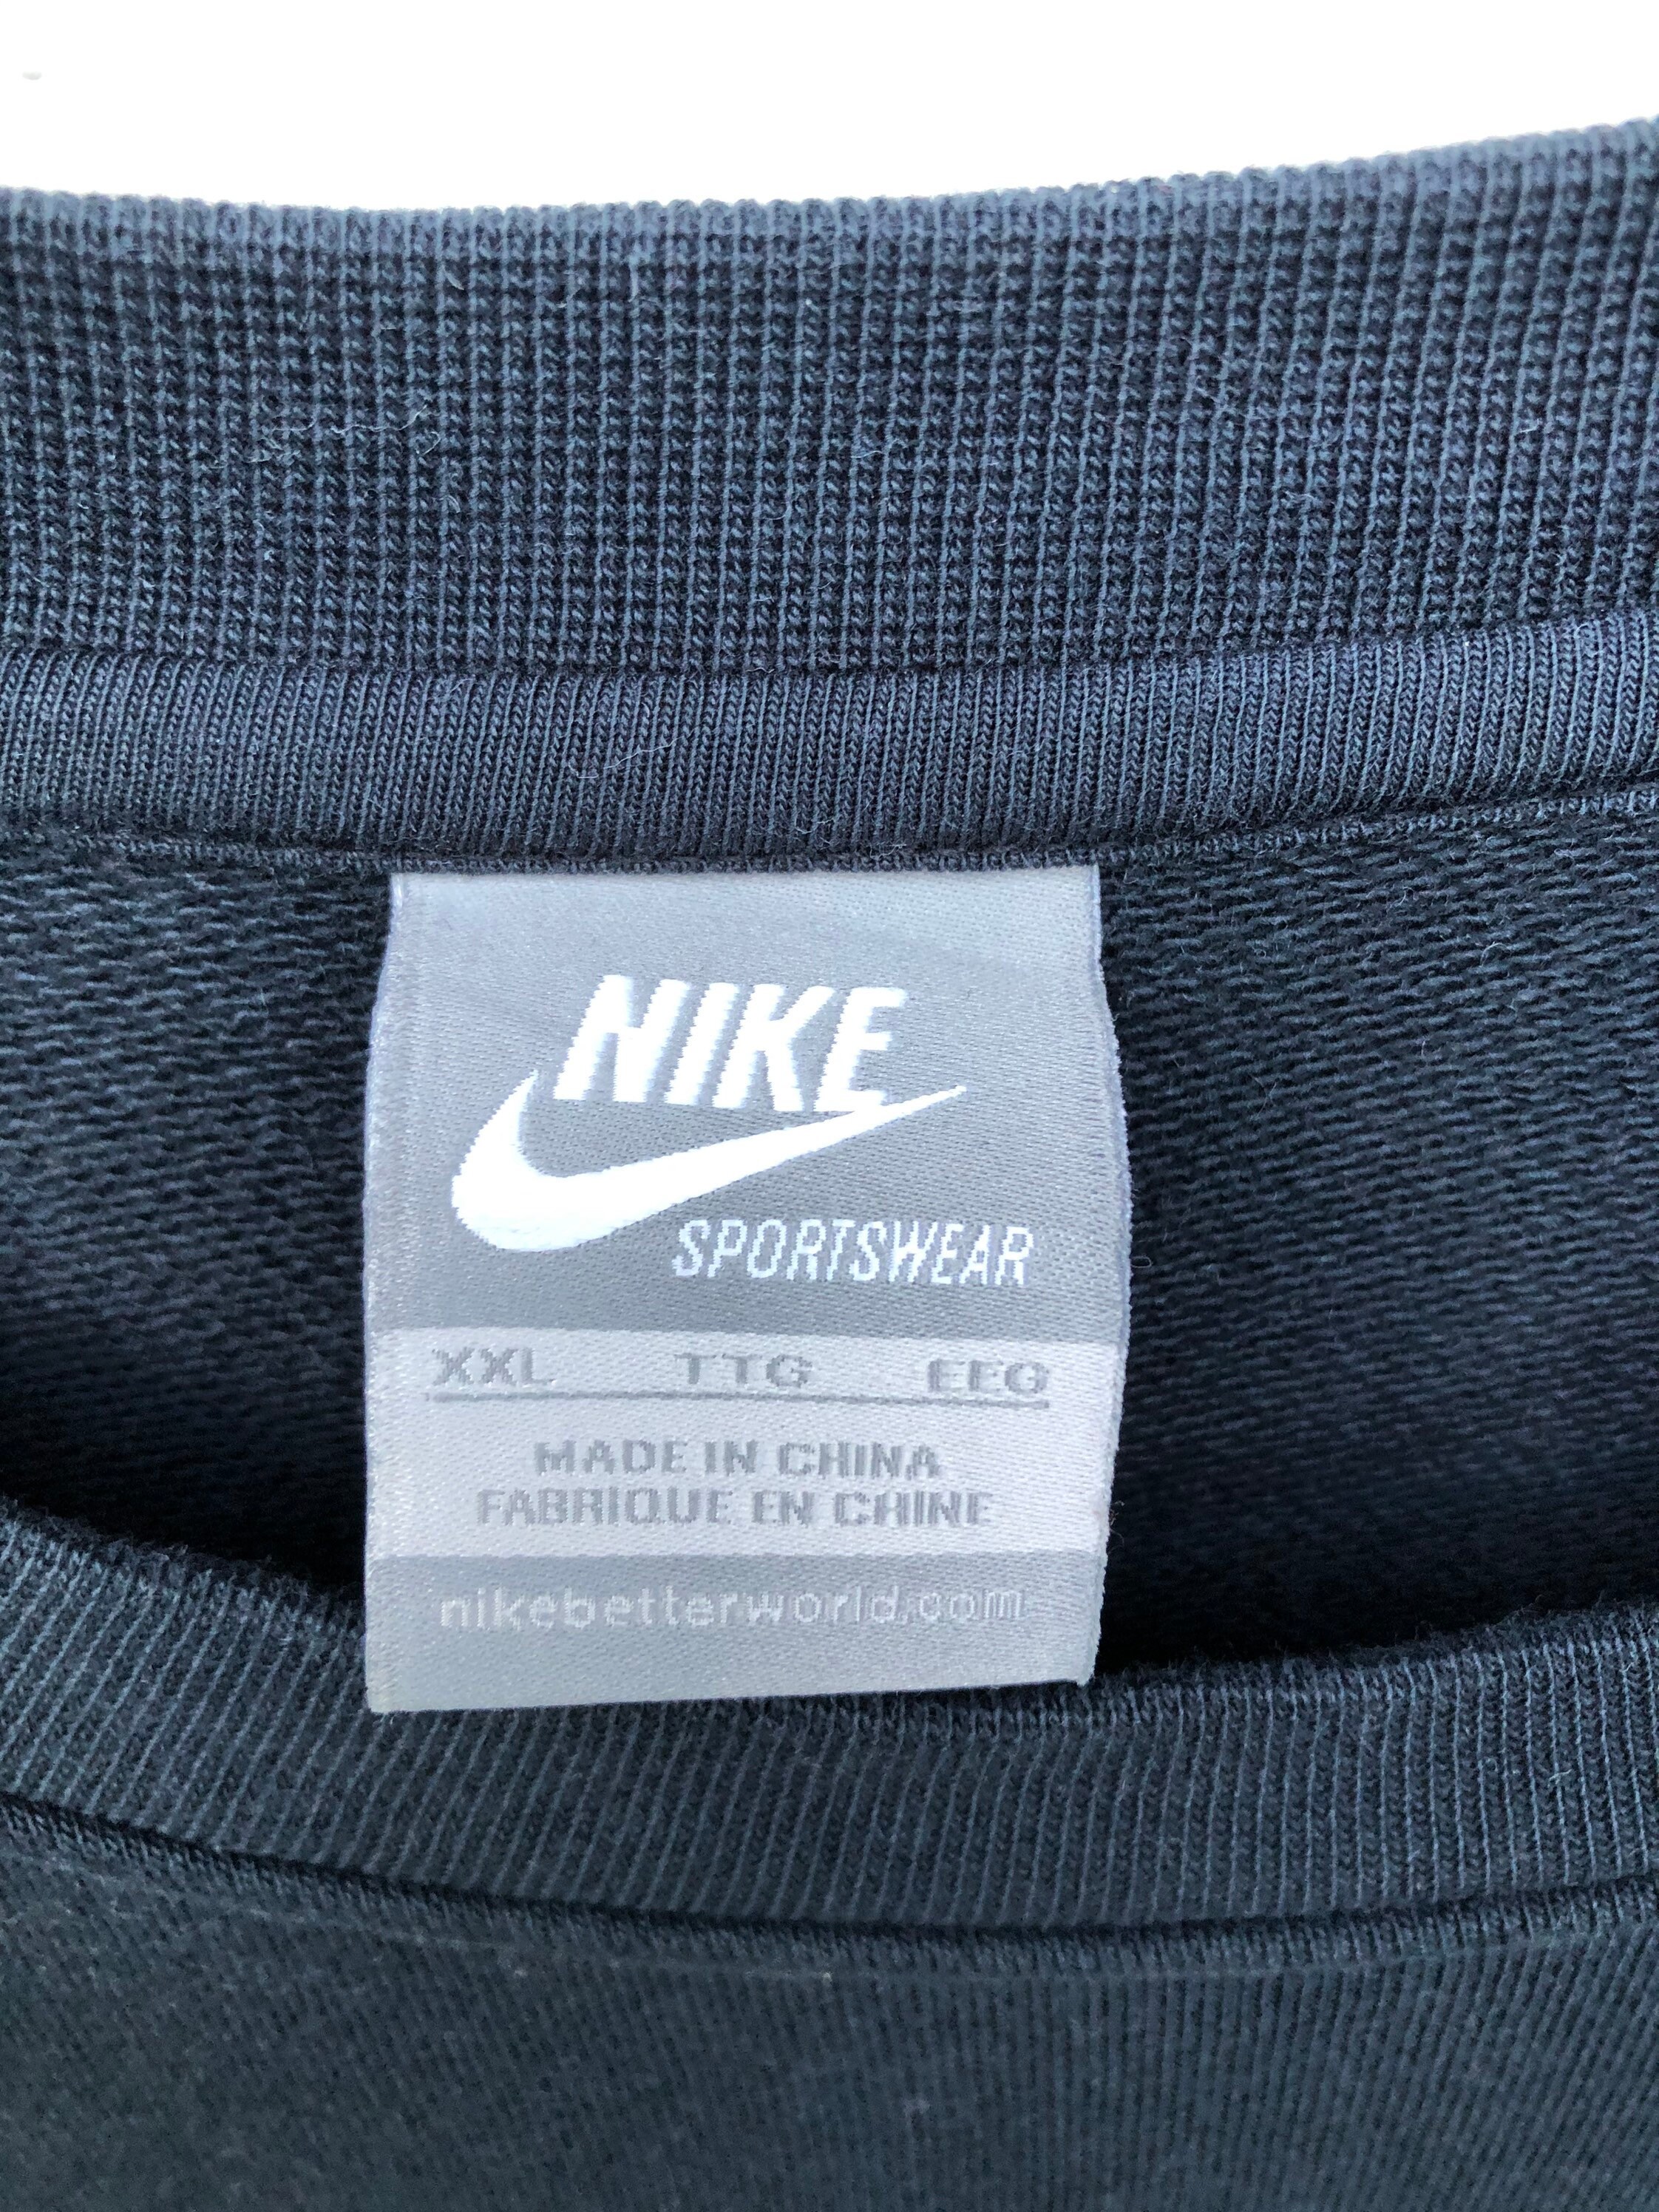 PICK Nike USATF printed spellout crewneck sweatshirt zipper | Etsy